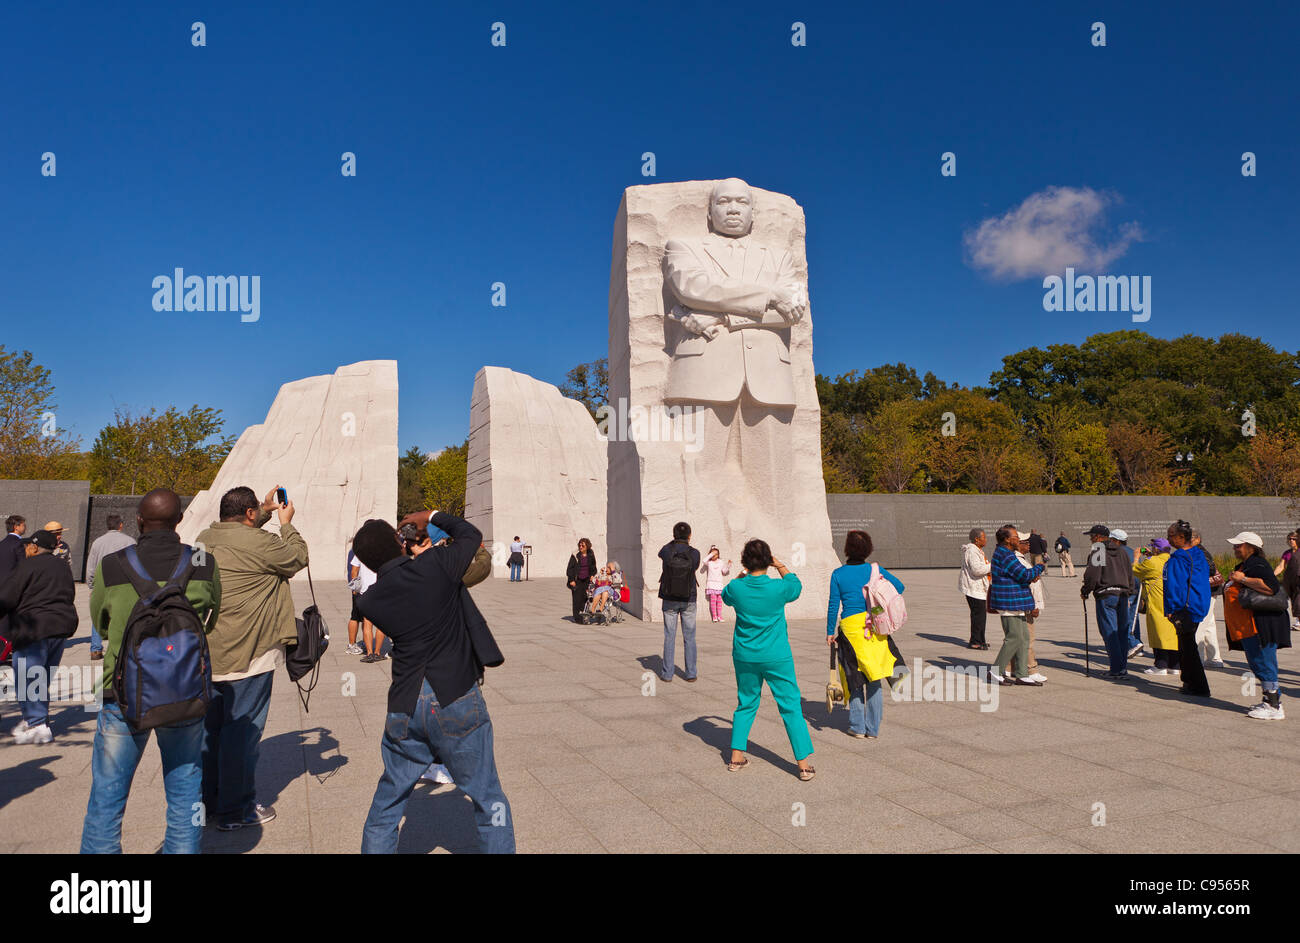 WASHINGTON, DC USA - Martin Luther King, Jr. Memorial and tourists. Stock Photo